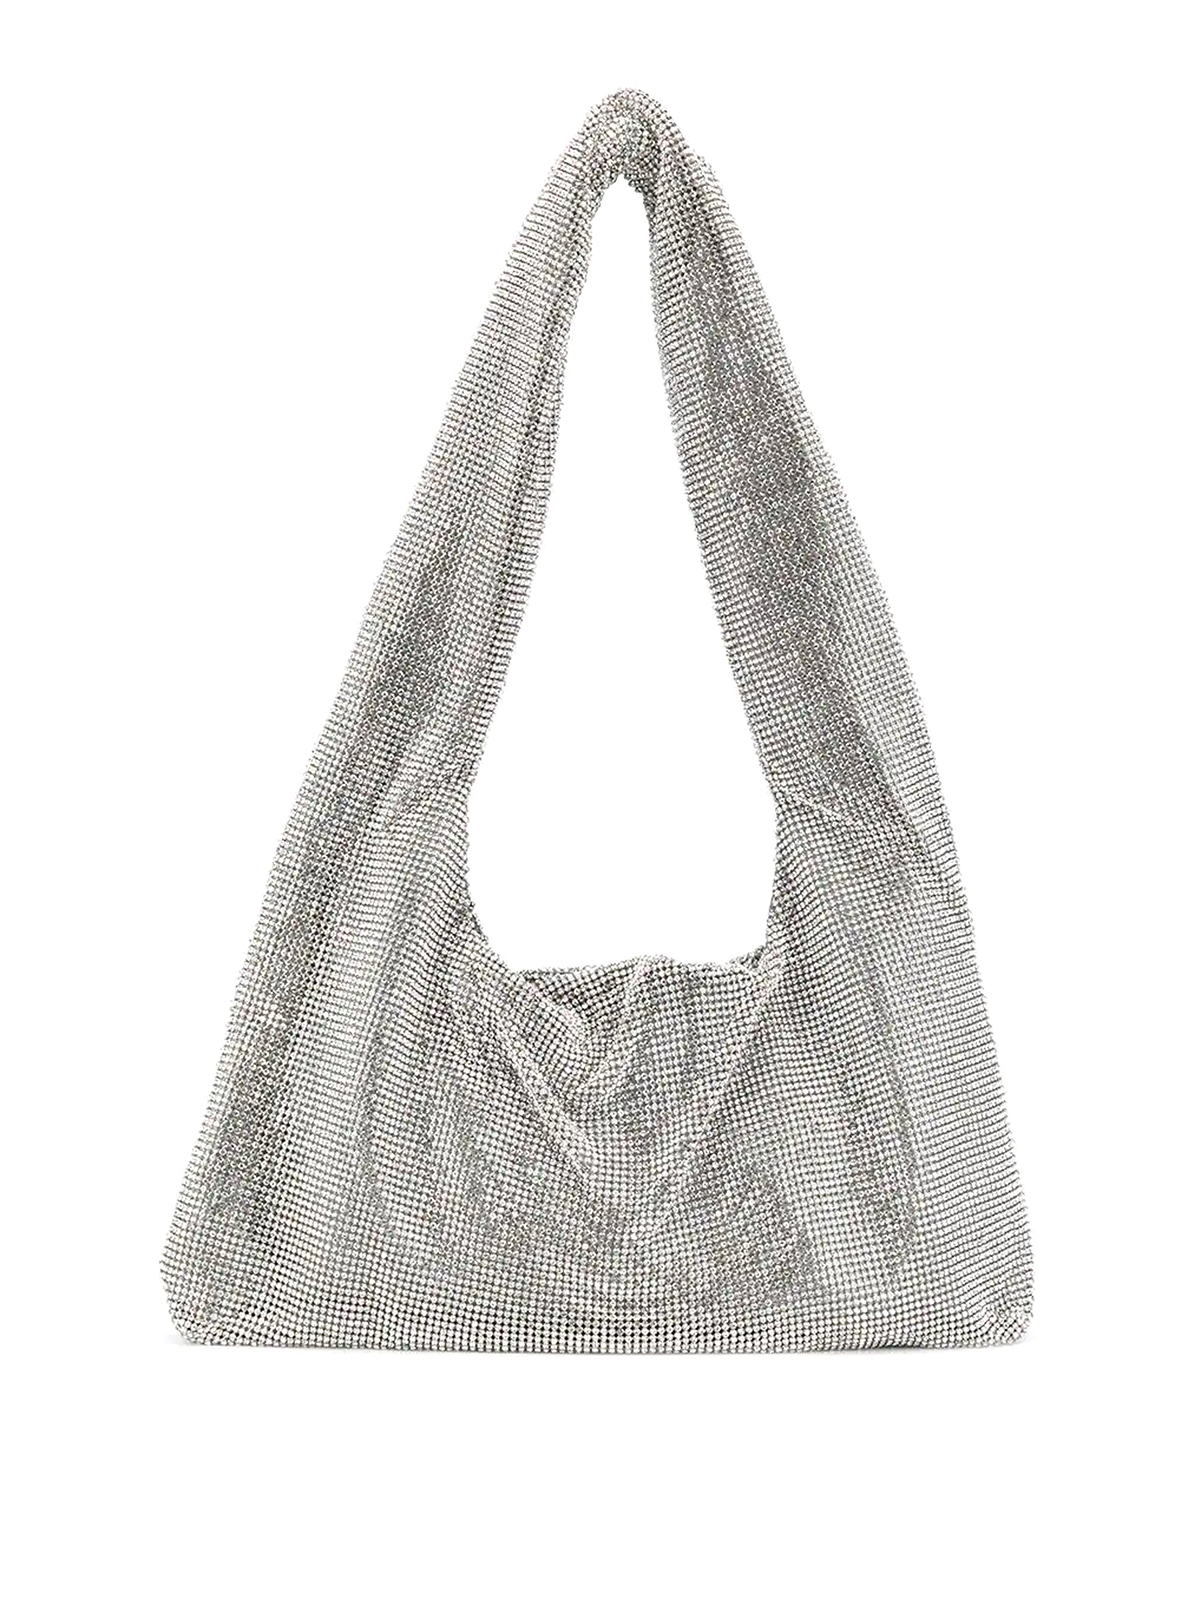 Designer PU Leather Underarm Bag Women Shoulder Bag Simple Totes Bags  Armpit Bag Purse Handbags,Silver - Walmart.com